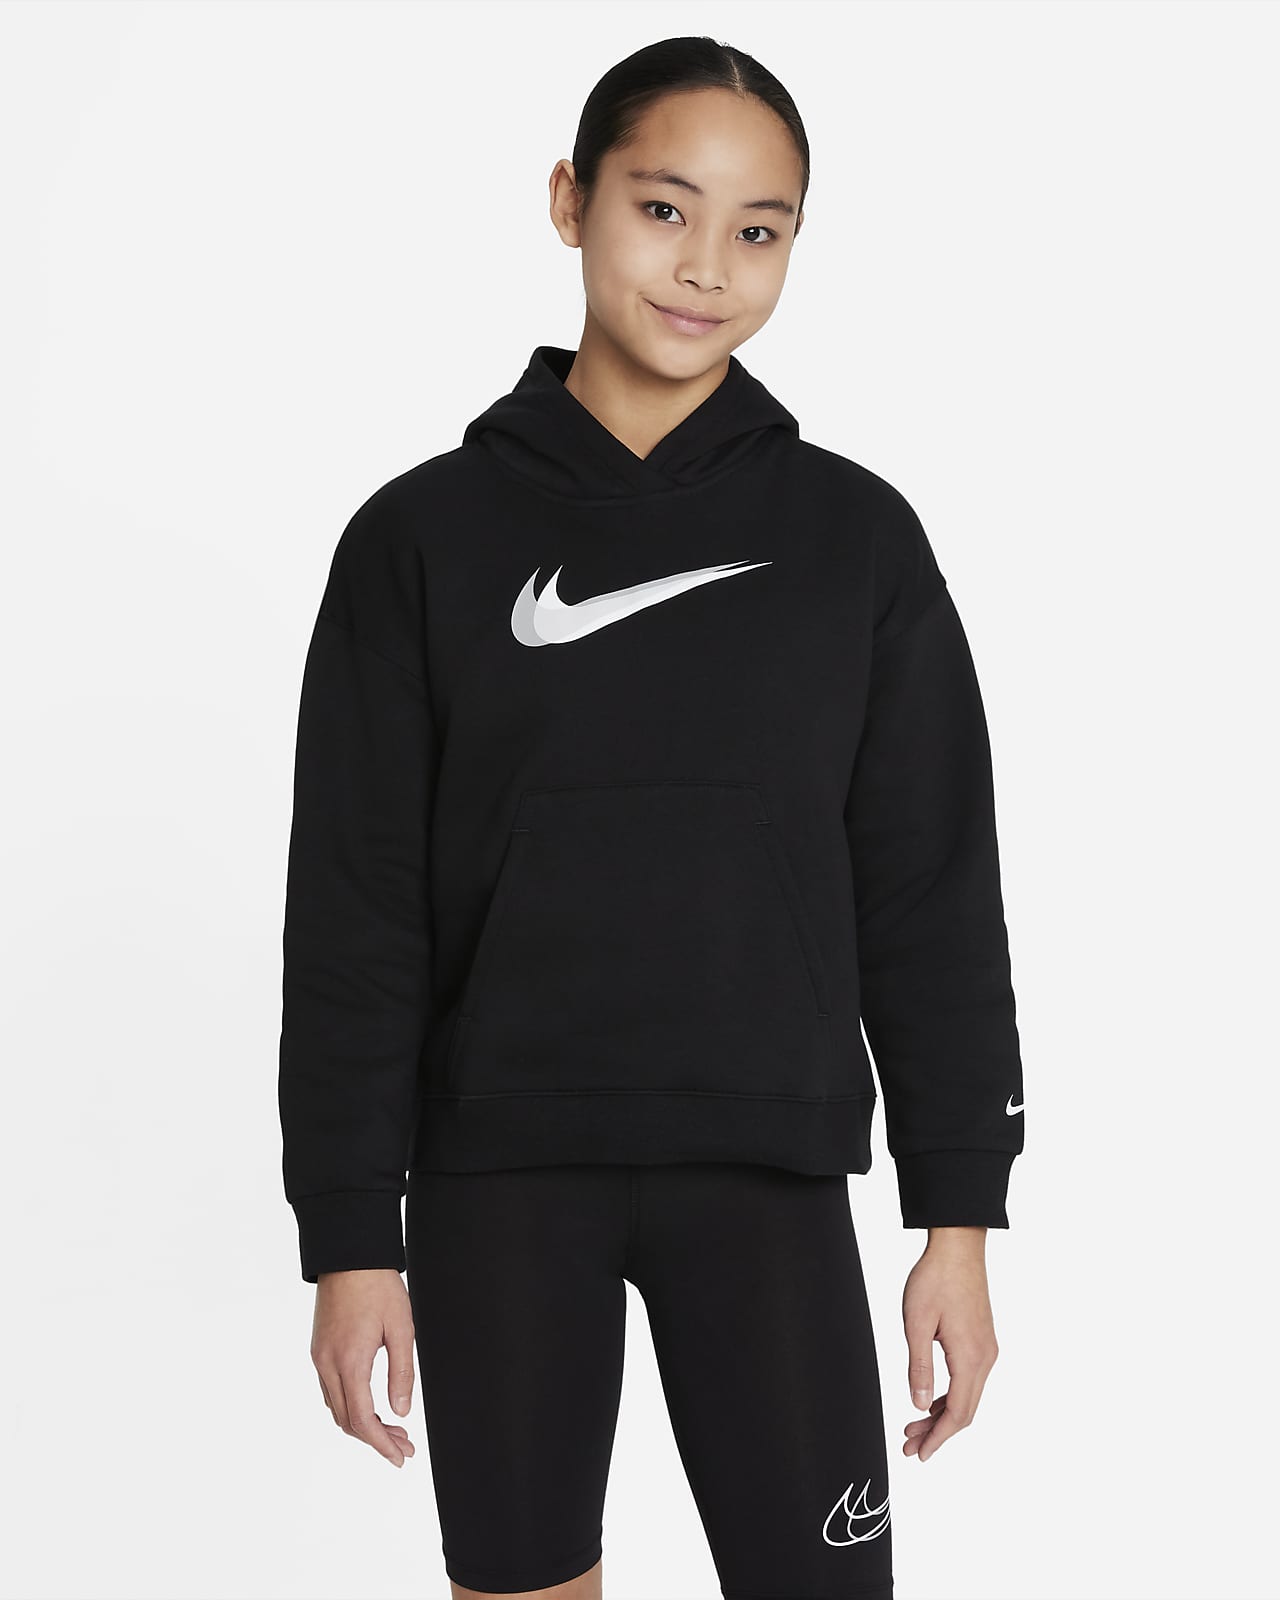 Danshuvtröja Nike Sportswear för tjejer